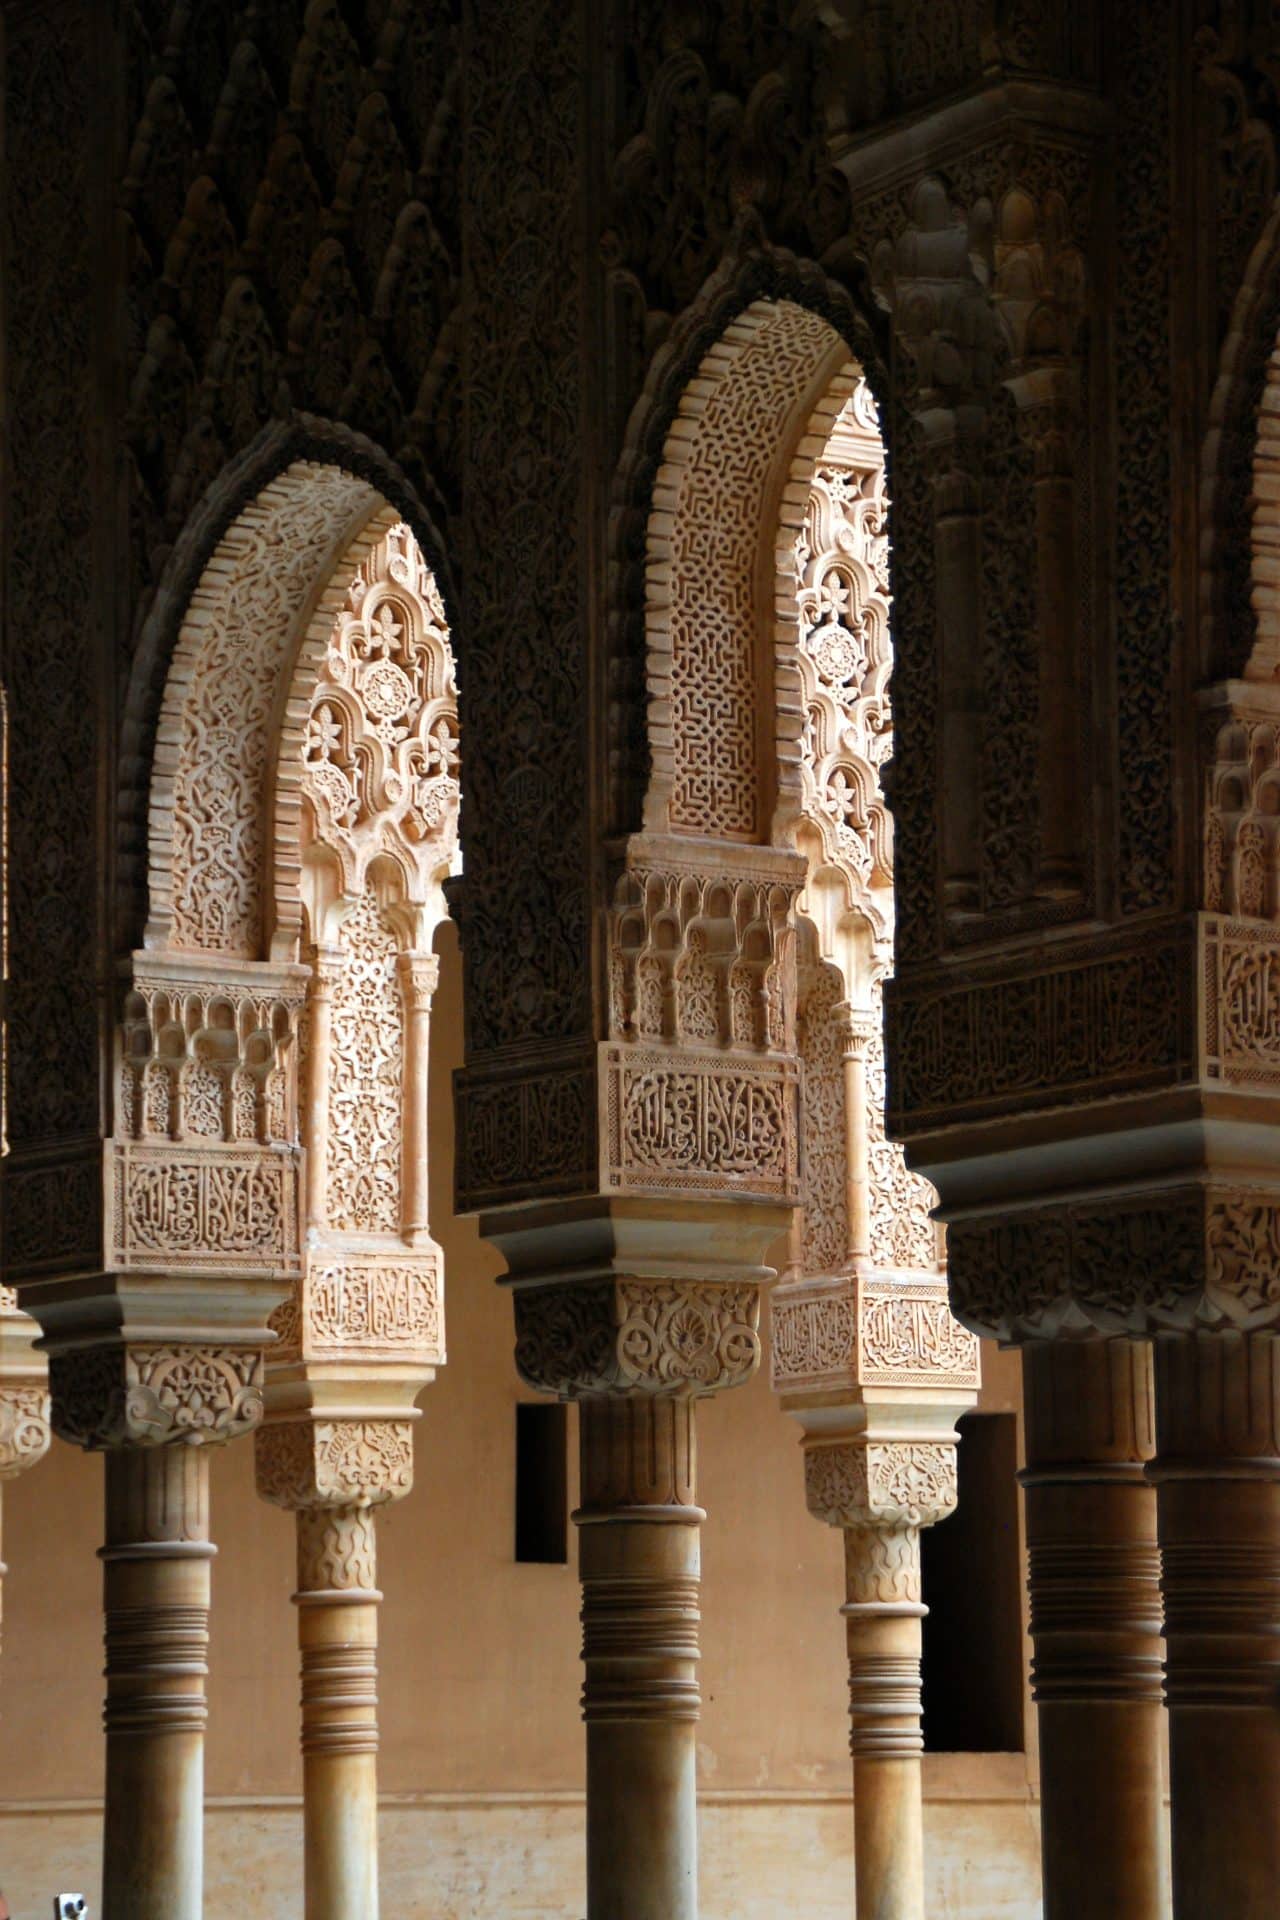 Pillars of the AlHambra